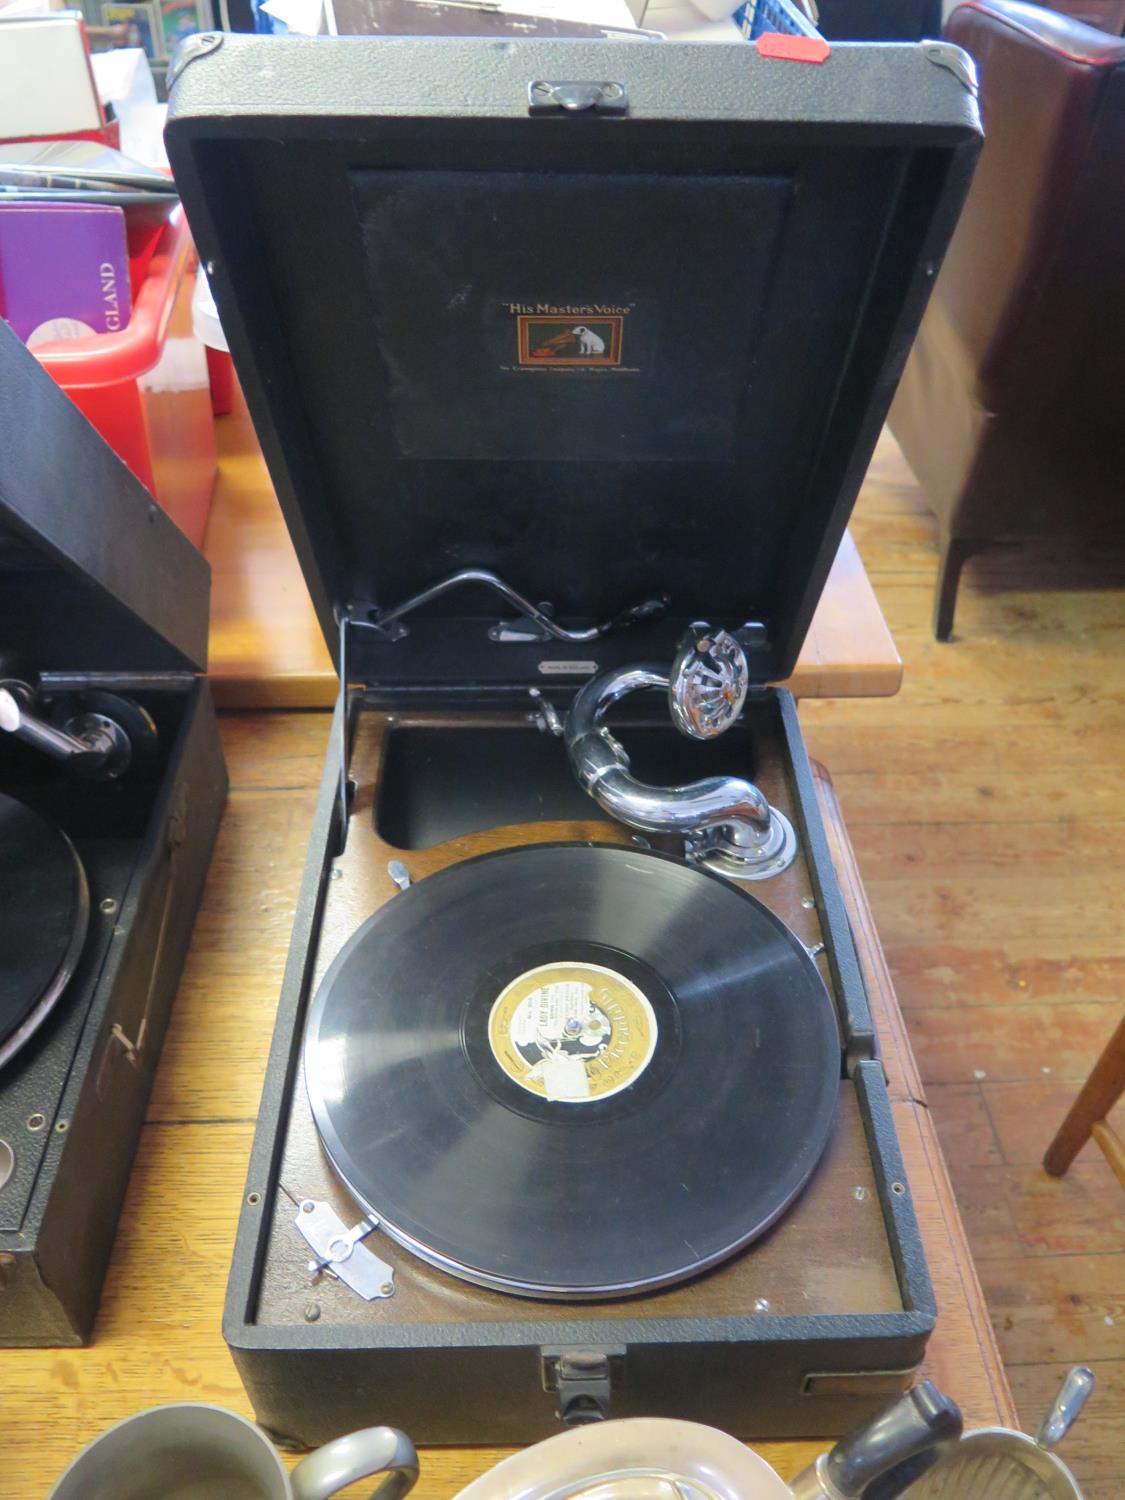 An HMV Wind Up Gramophone